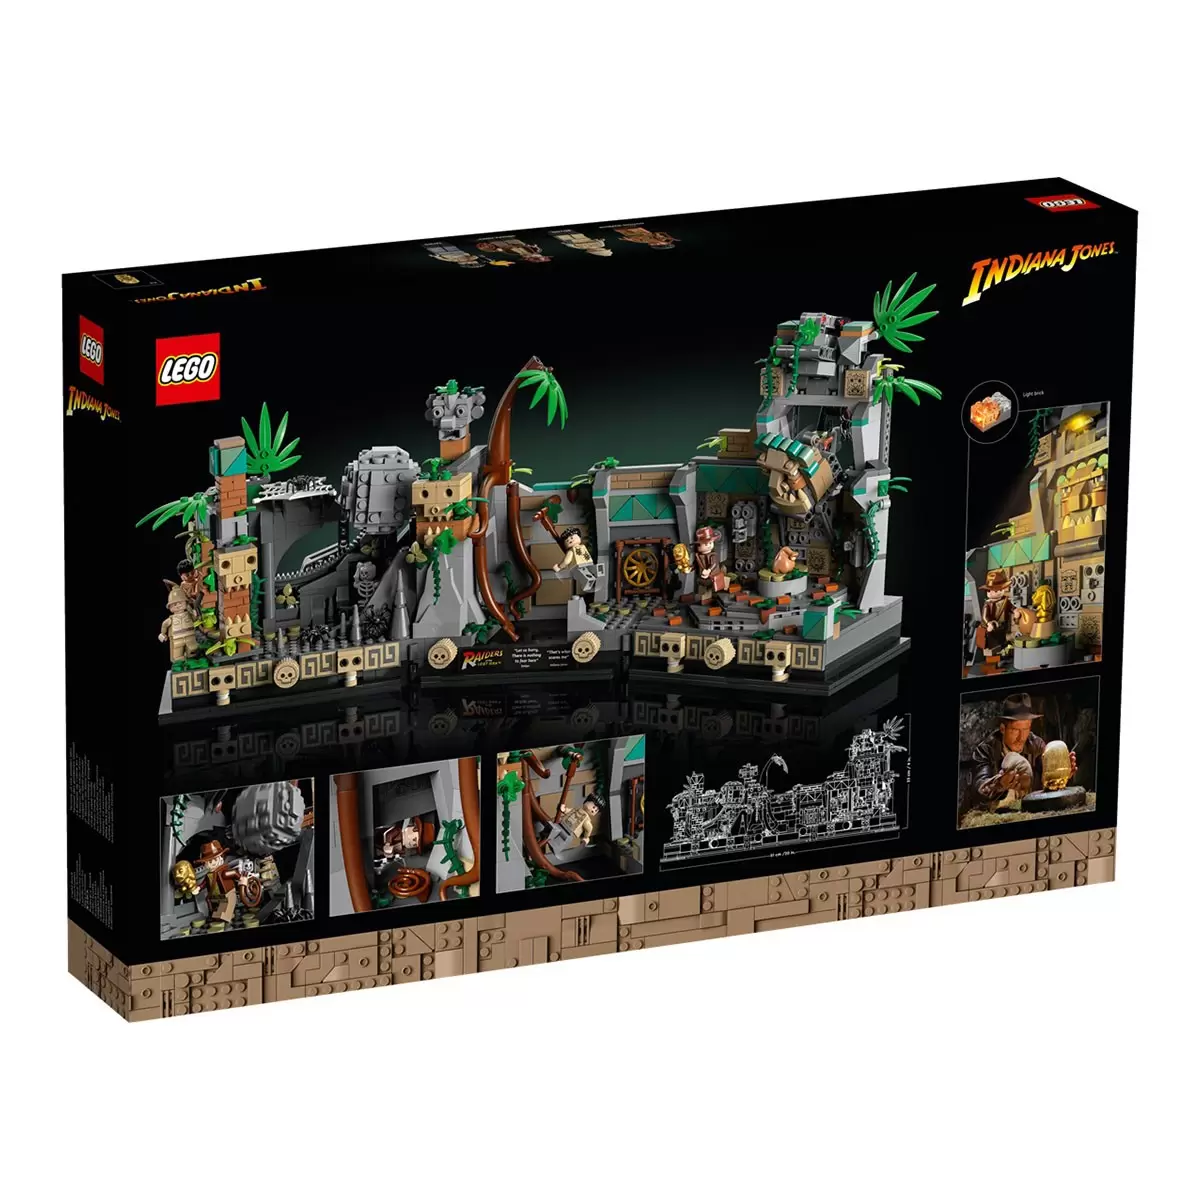 LEGO Indiana Jones系列 法櫃奇兵金像神廟 77015